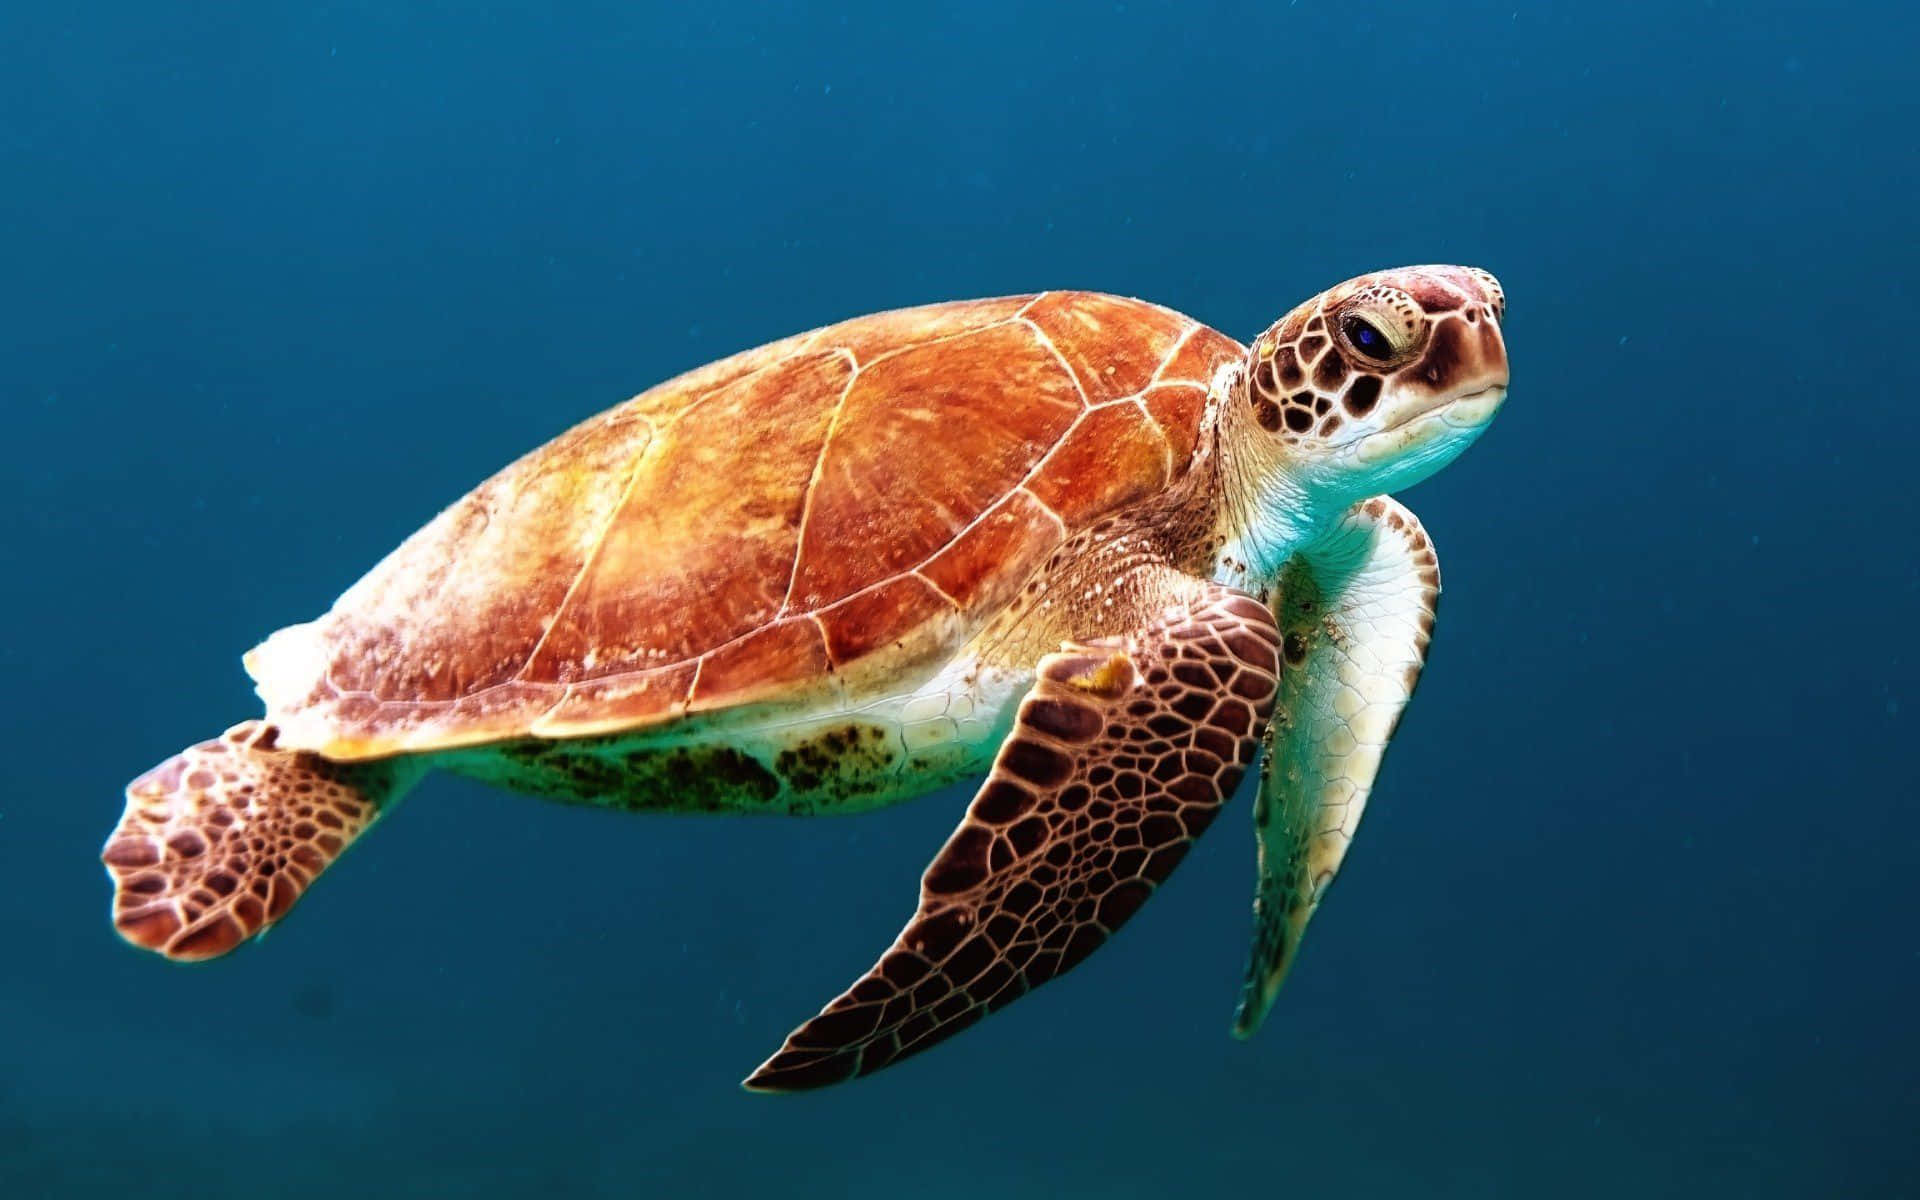 A majestic sea turtle cruising through its peaceful habitat